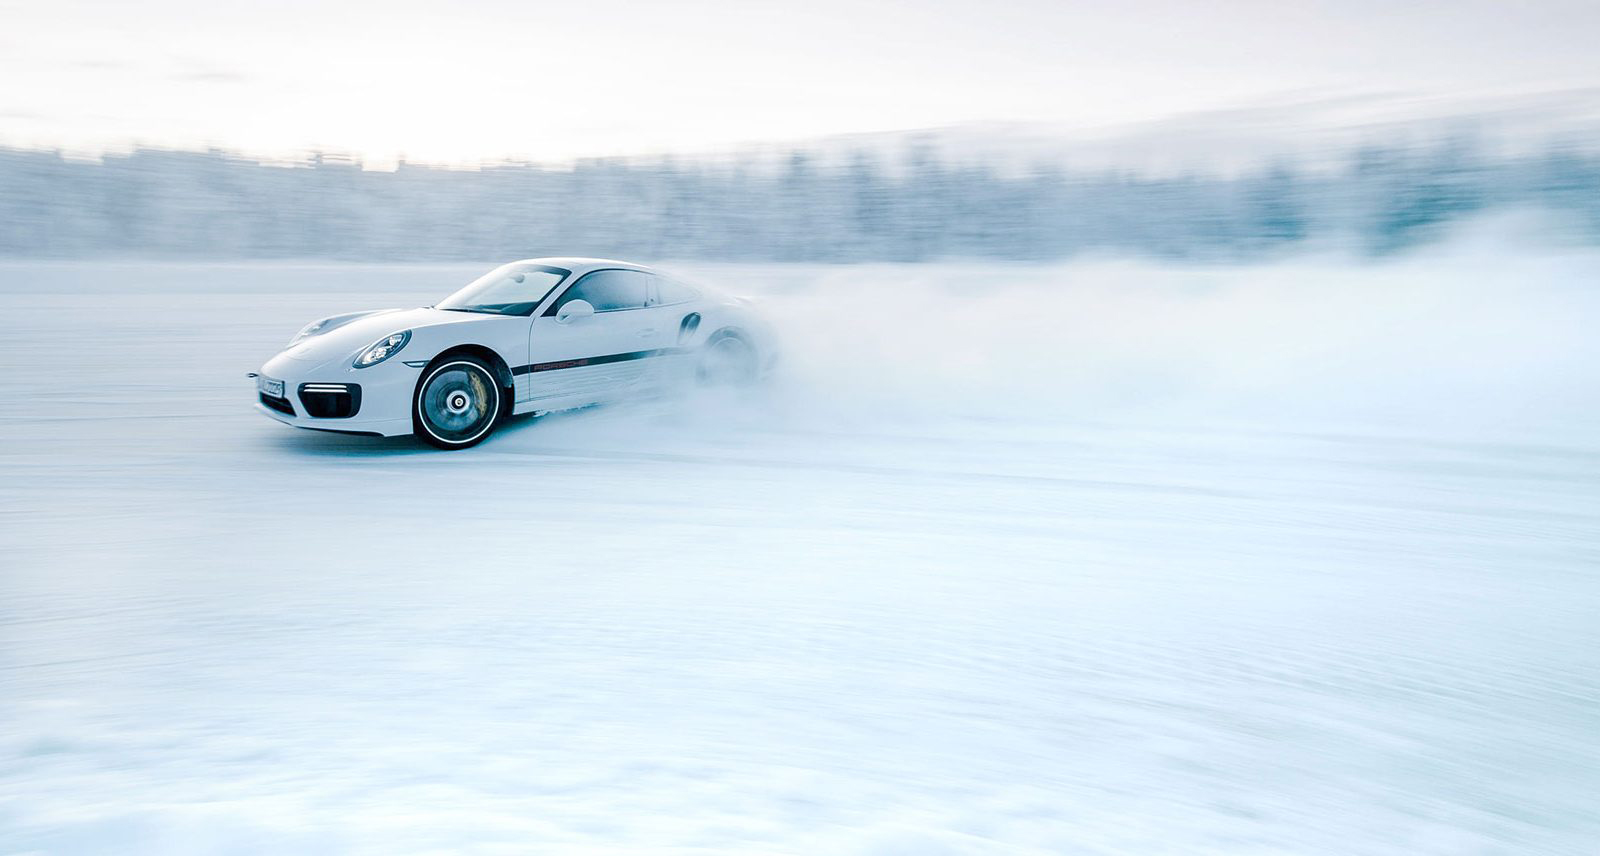 Car snowbunny